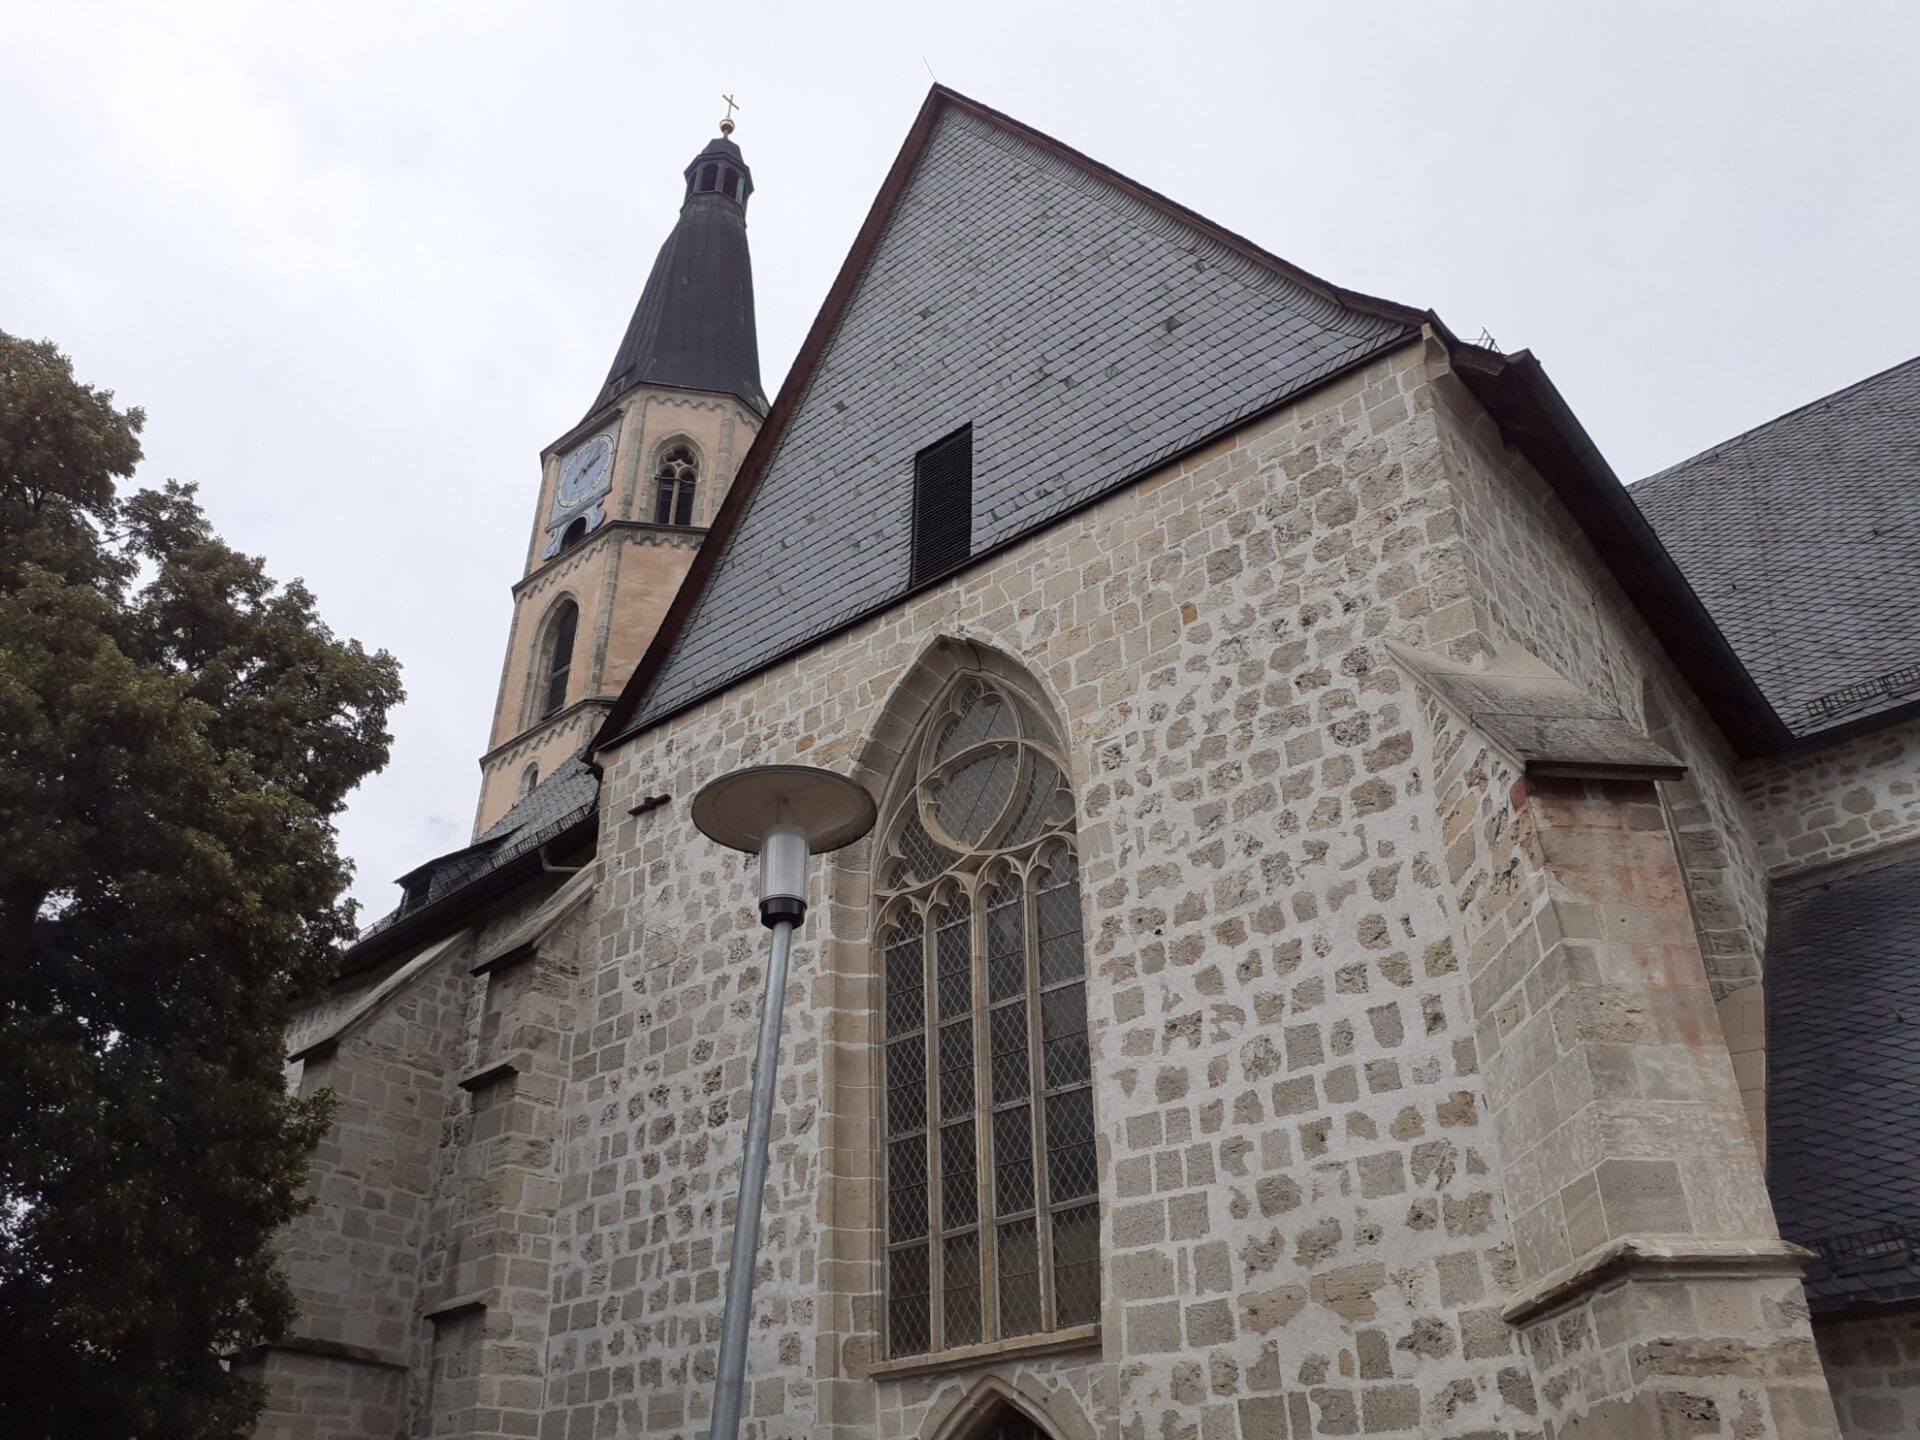 St. Blasii-Kirche Nordhausen